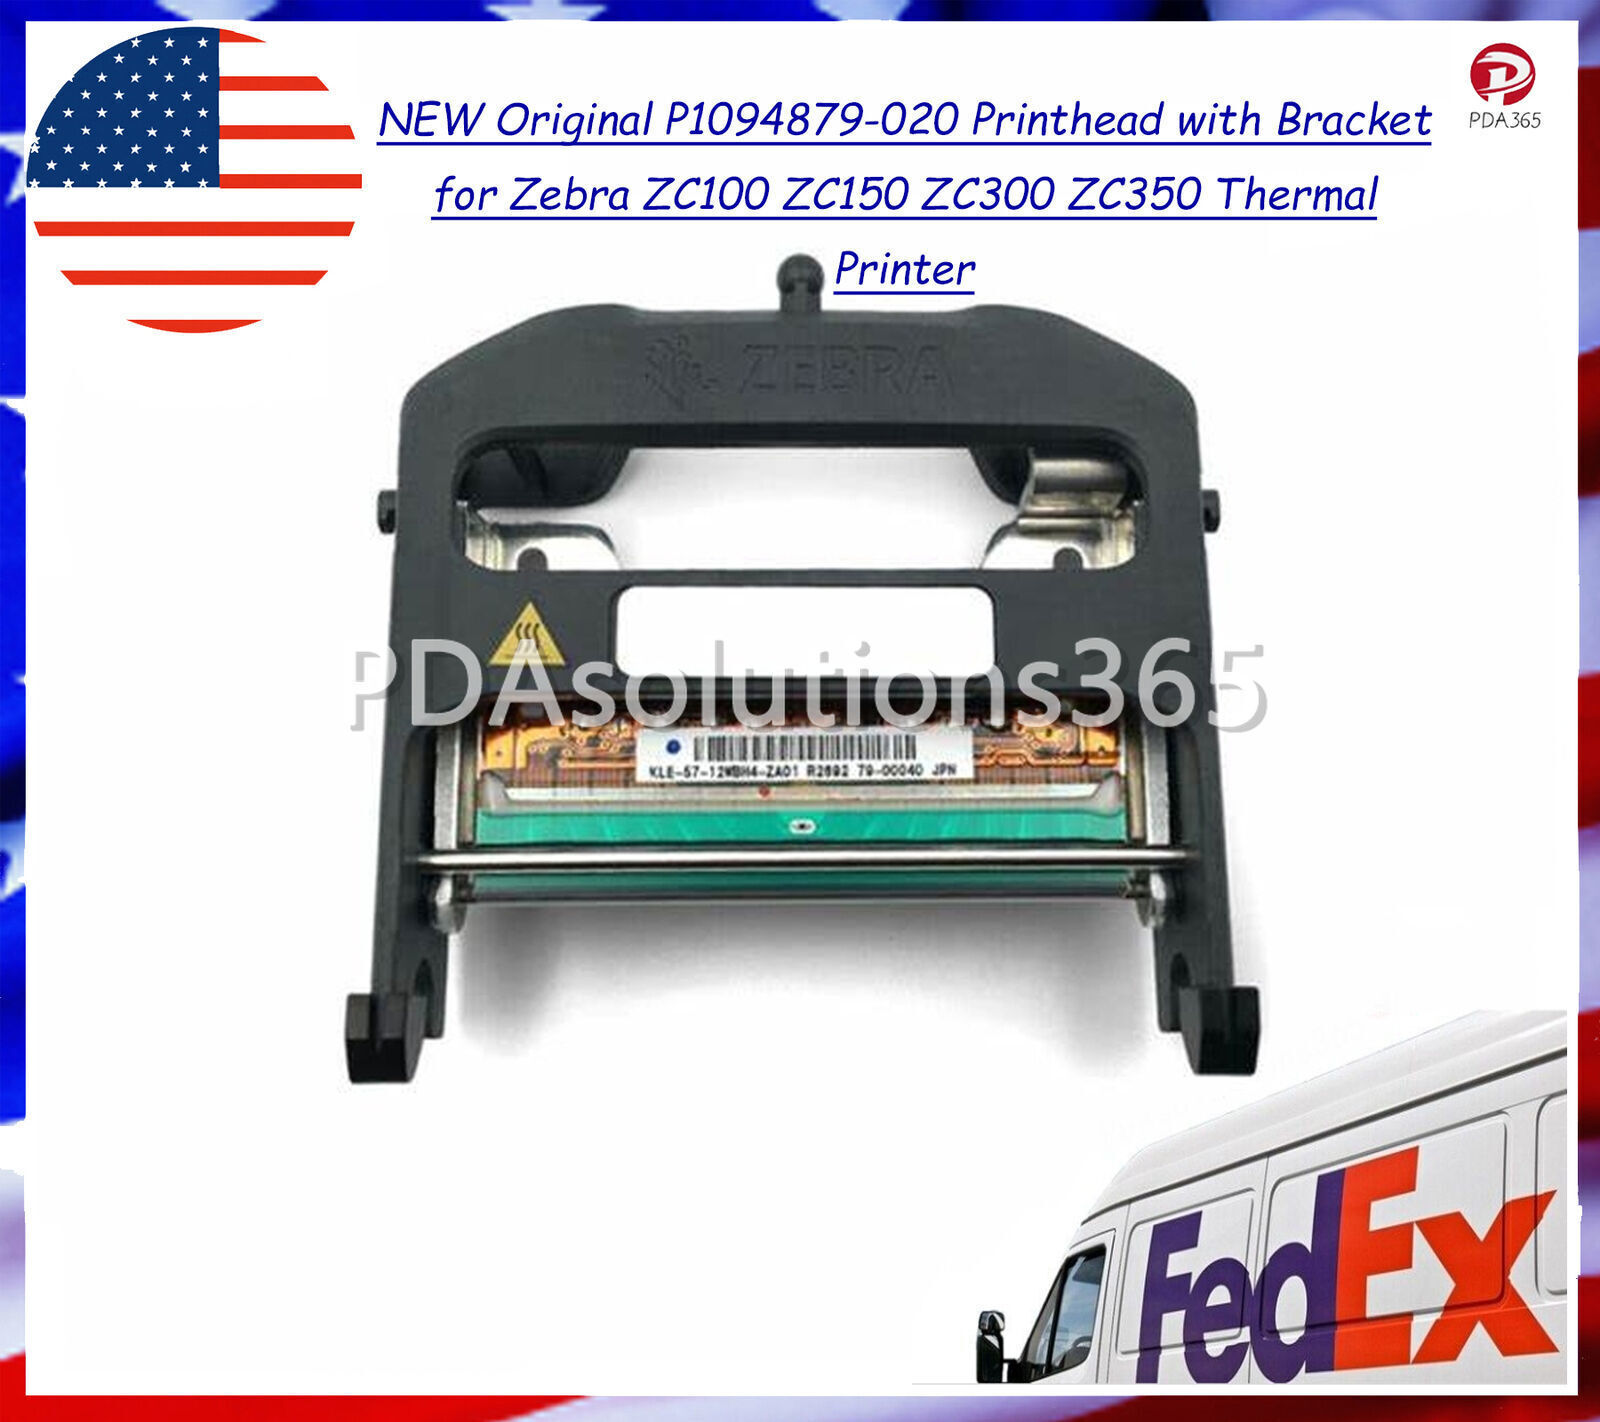 Original P1094879-020 Printhead w/ Bracket for Zebra ZC100 ZC150 Thermal Printer